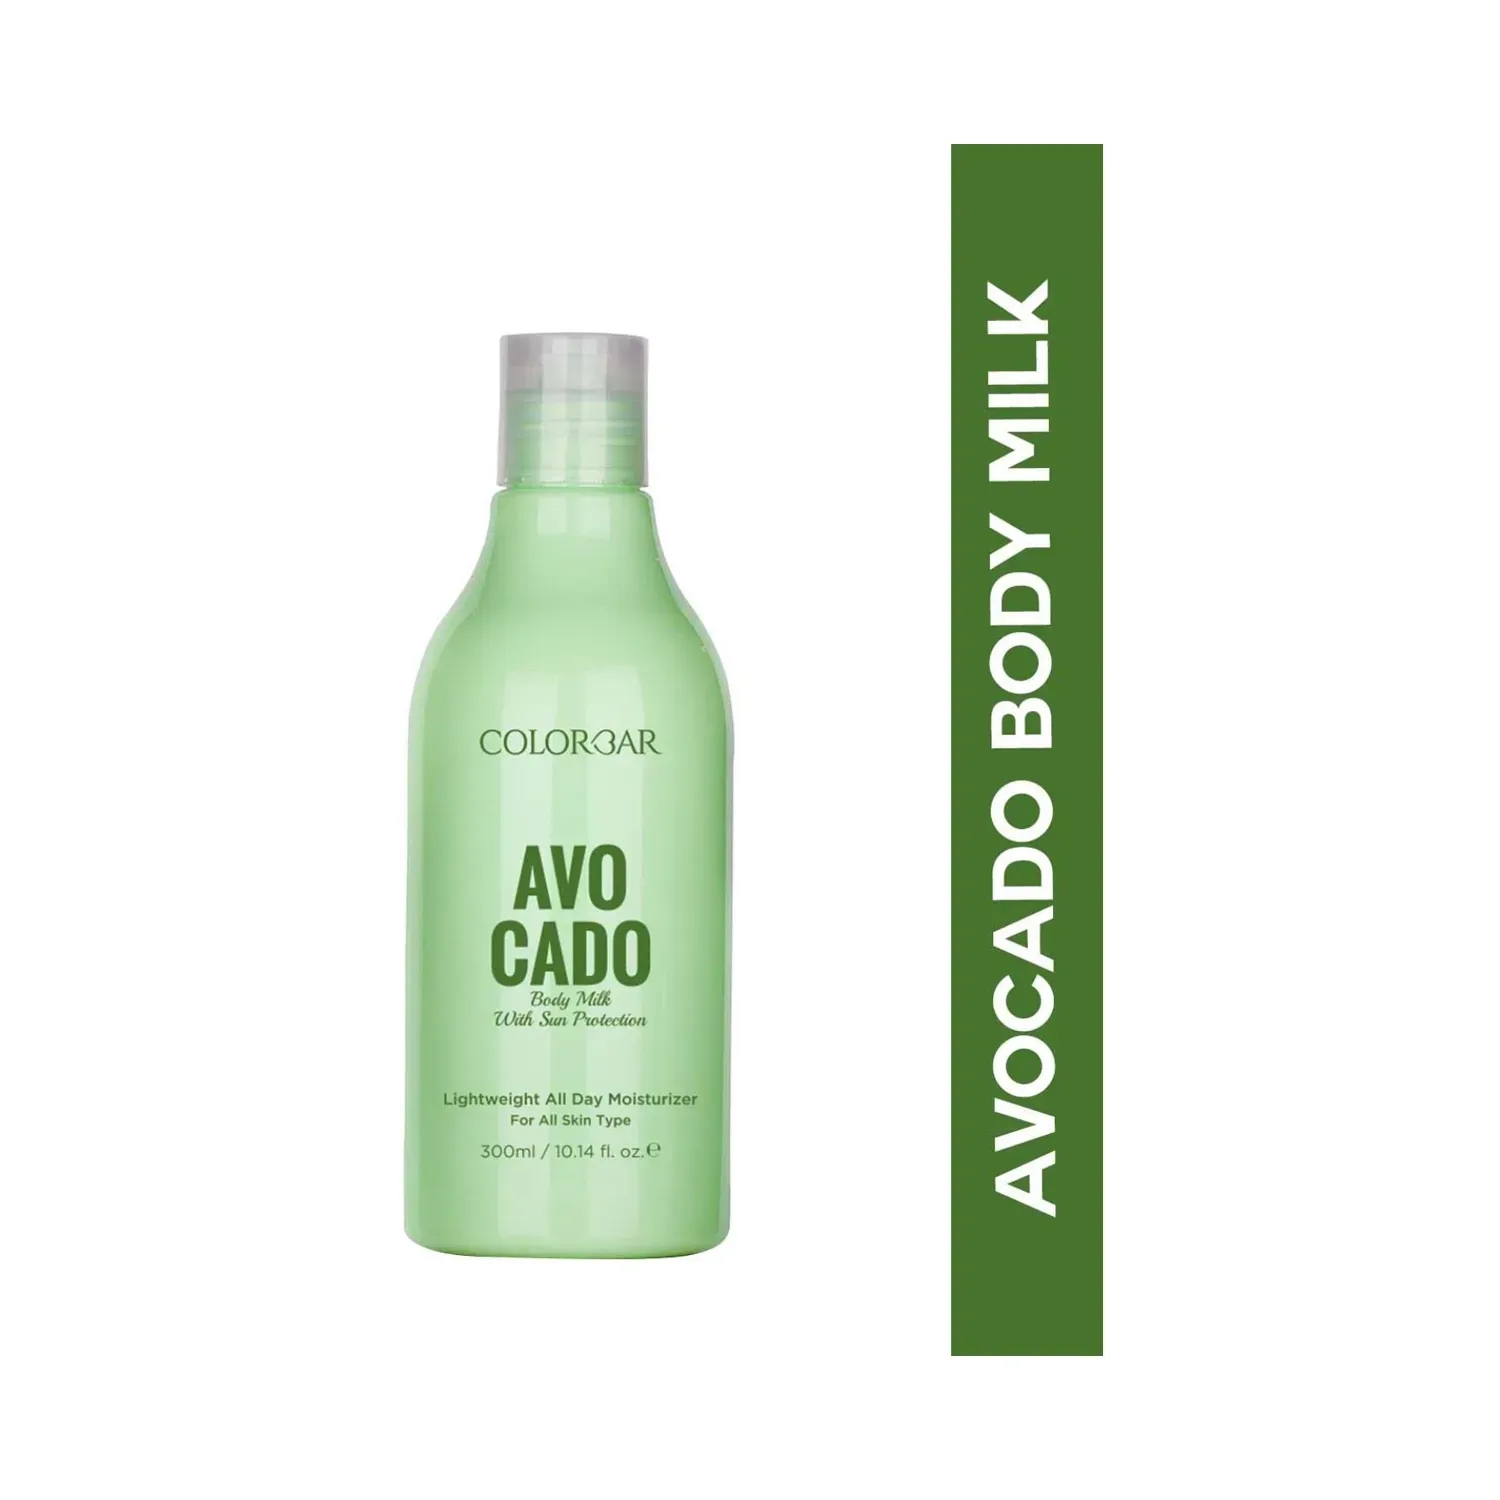 Colorbar | Colorbar Avocado Body Milk With Sun Protection Lightweight Moisturiser (300ml)